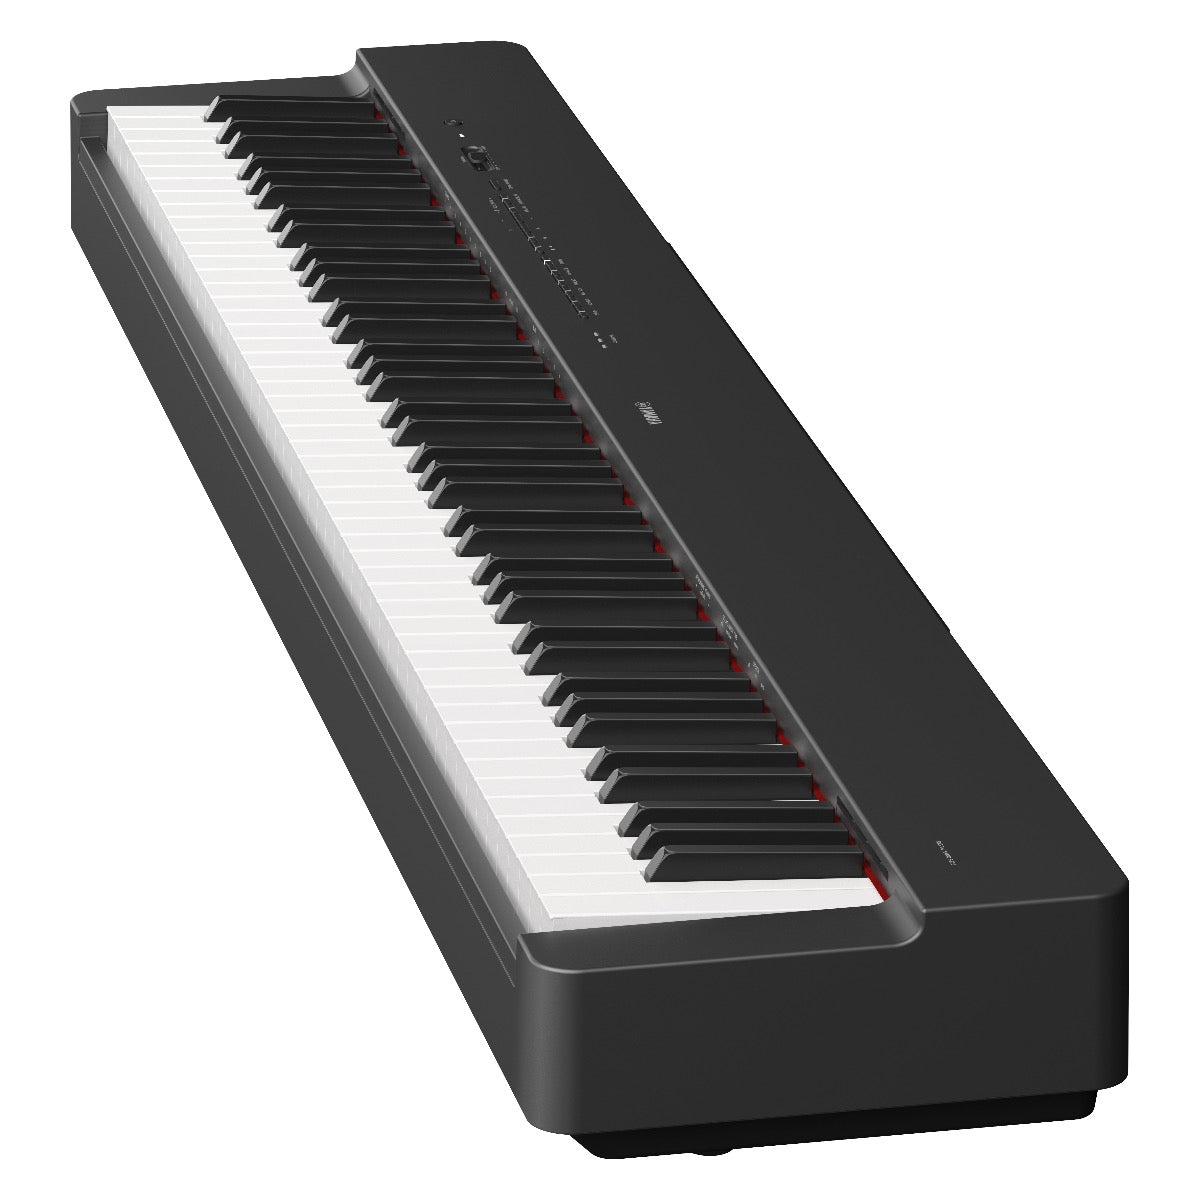 Yamaha P-225 Digital Piano - Black STAGE ESSENTIALS BUNDLE – Kraft Music